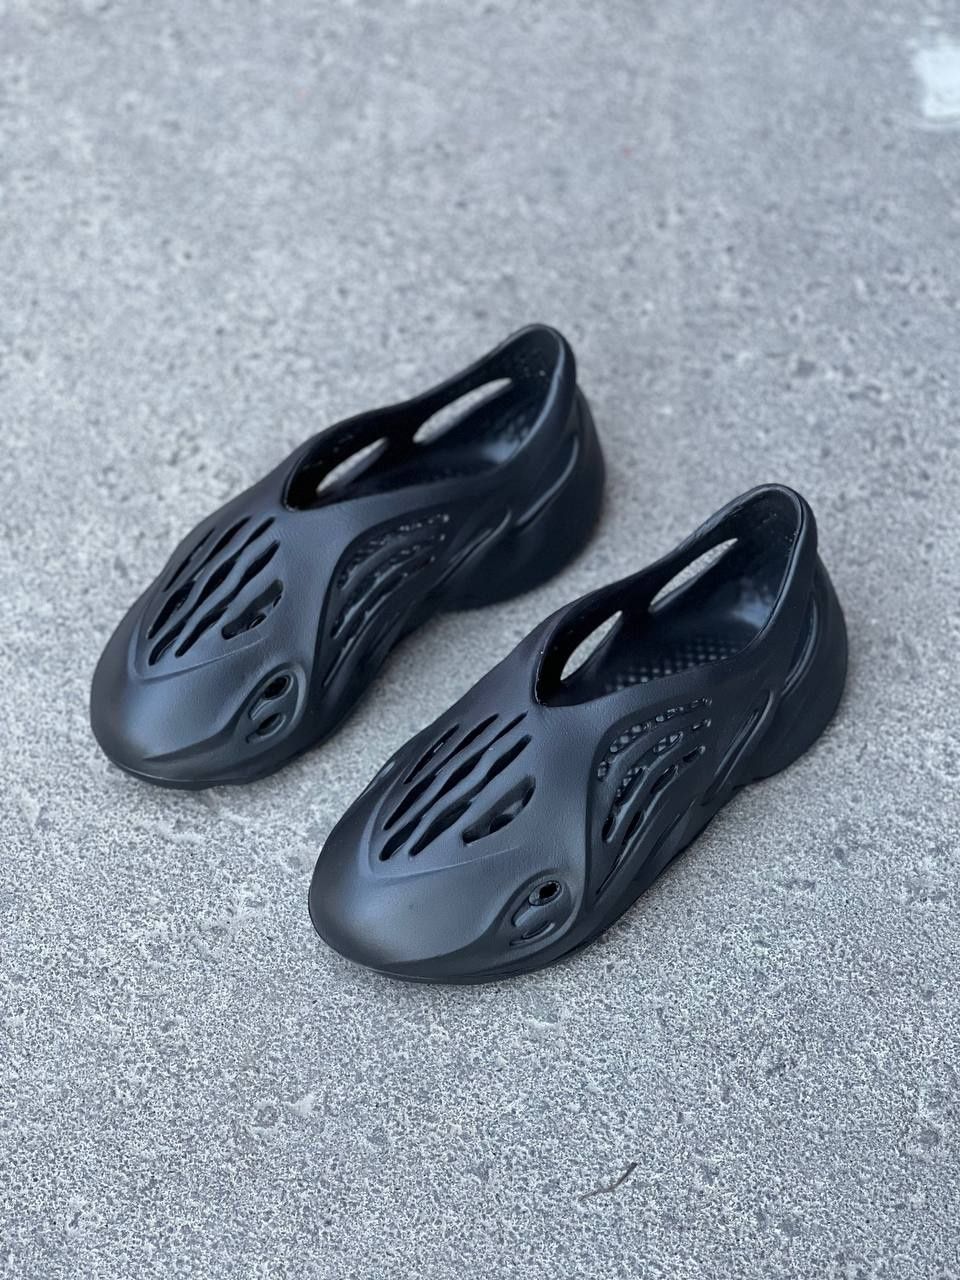 Кроксы Adidas Yeezy Foam Runner Mineral  black 42-43